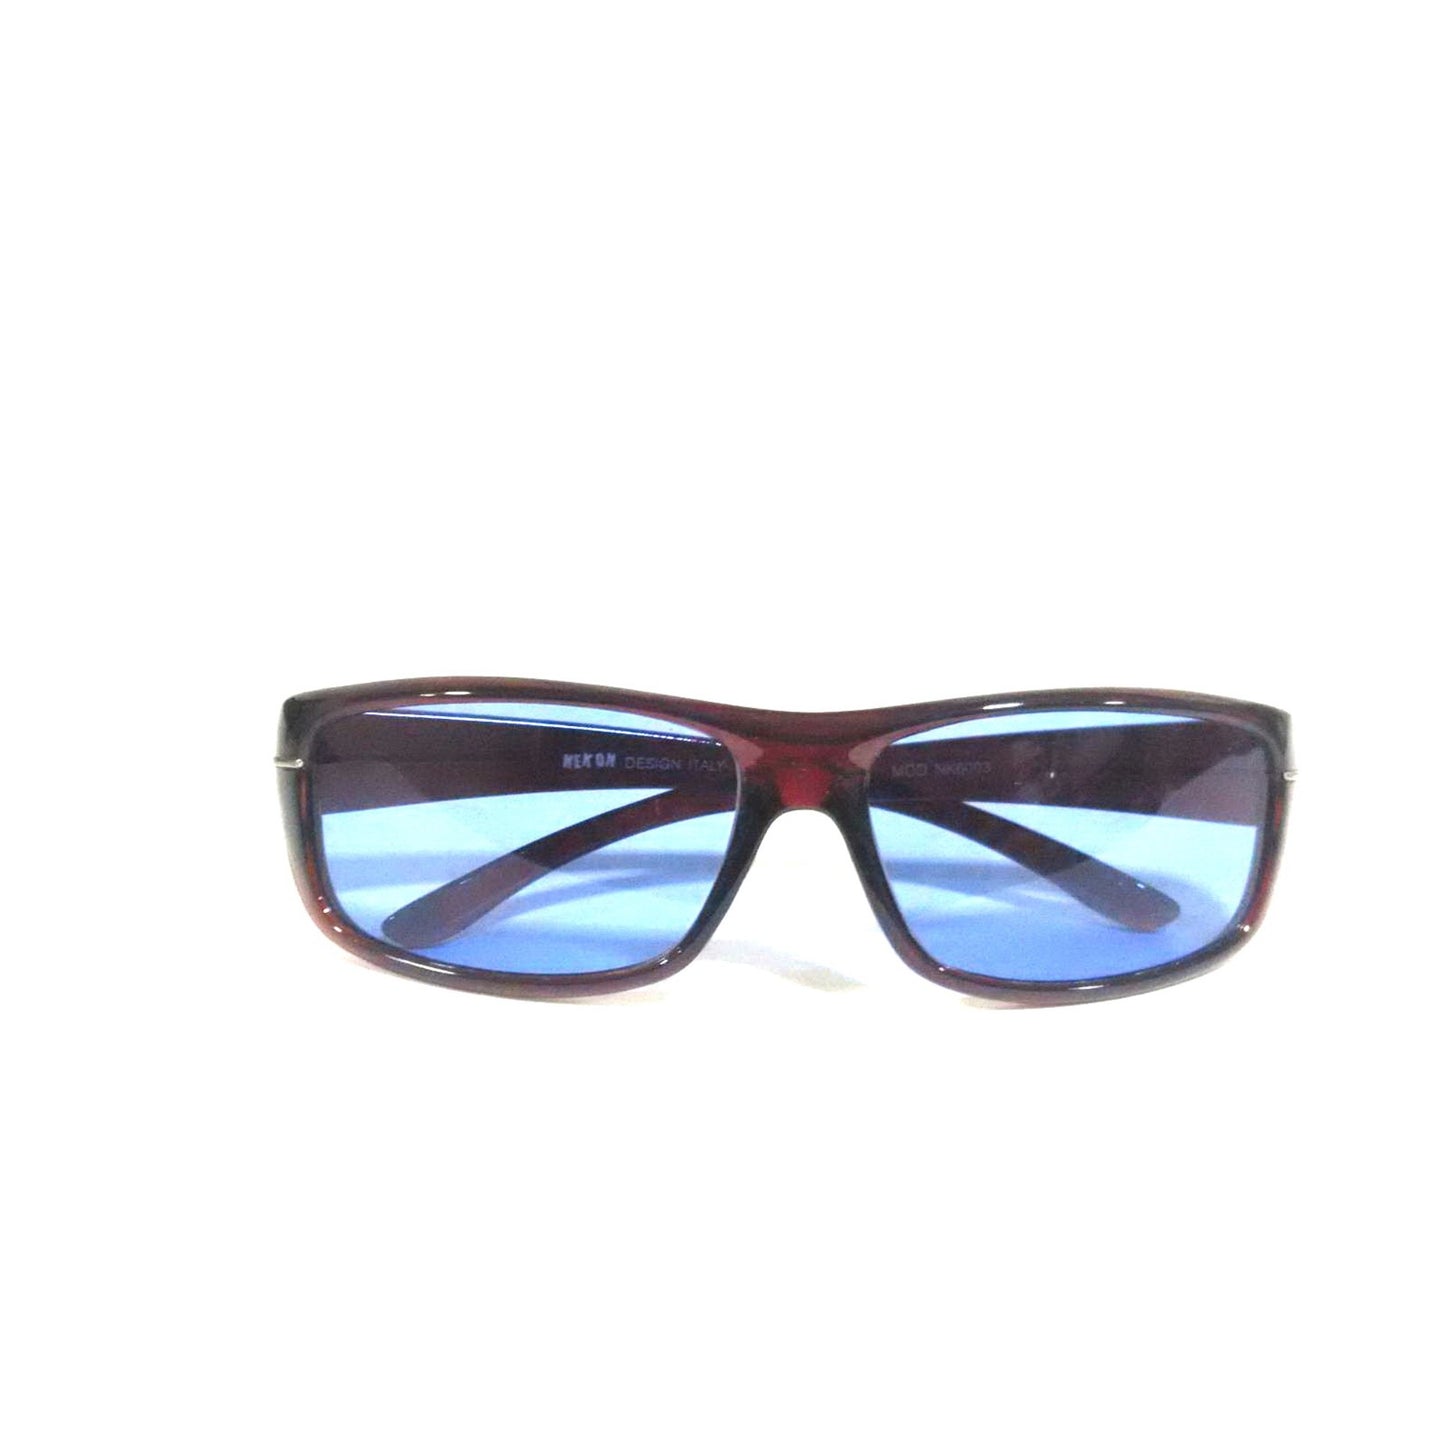 Brown Wraparound Sunglasses Adventure in Style